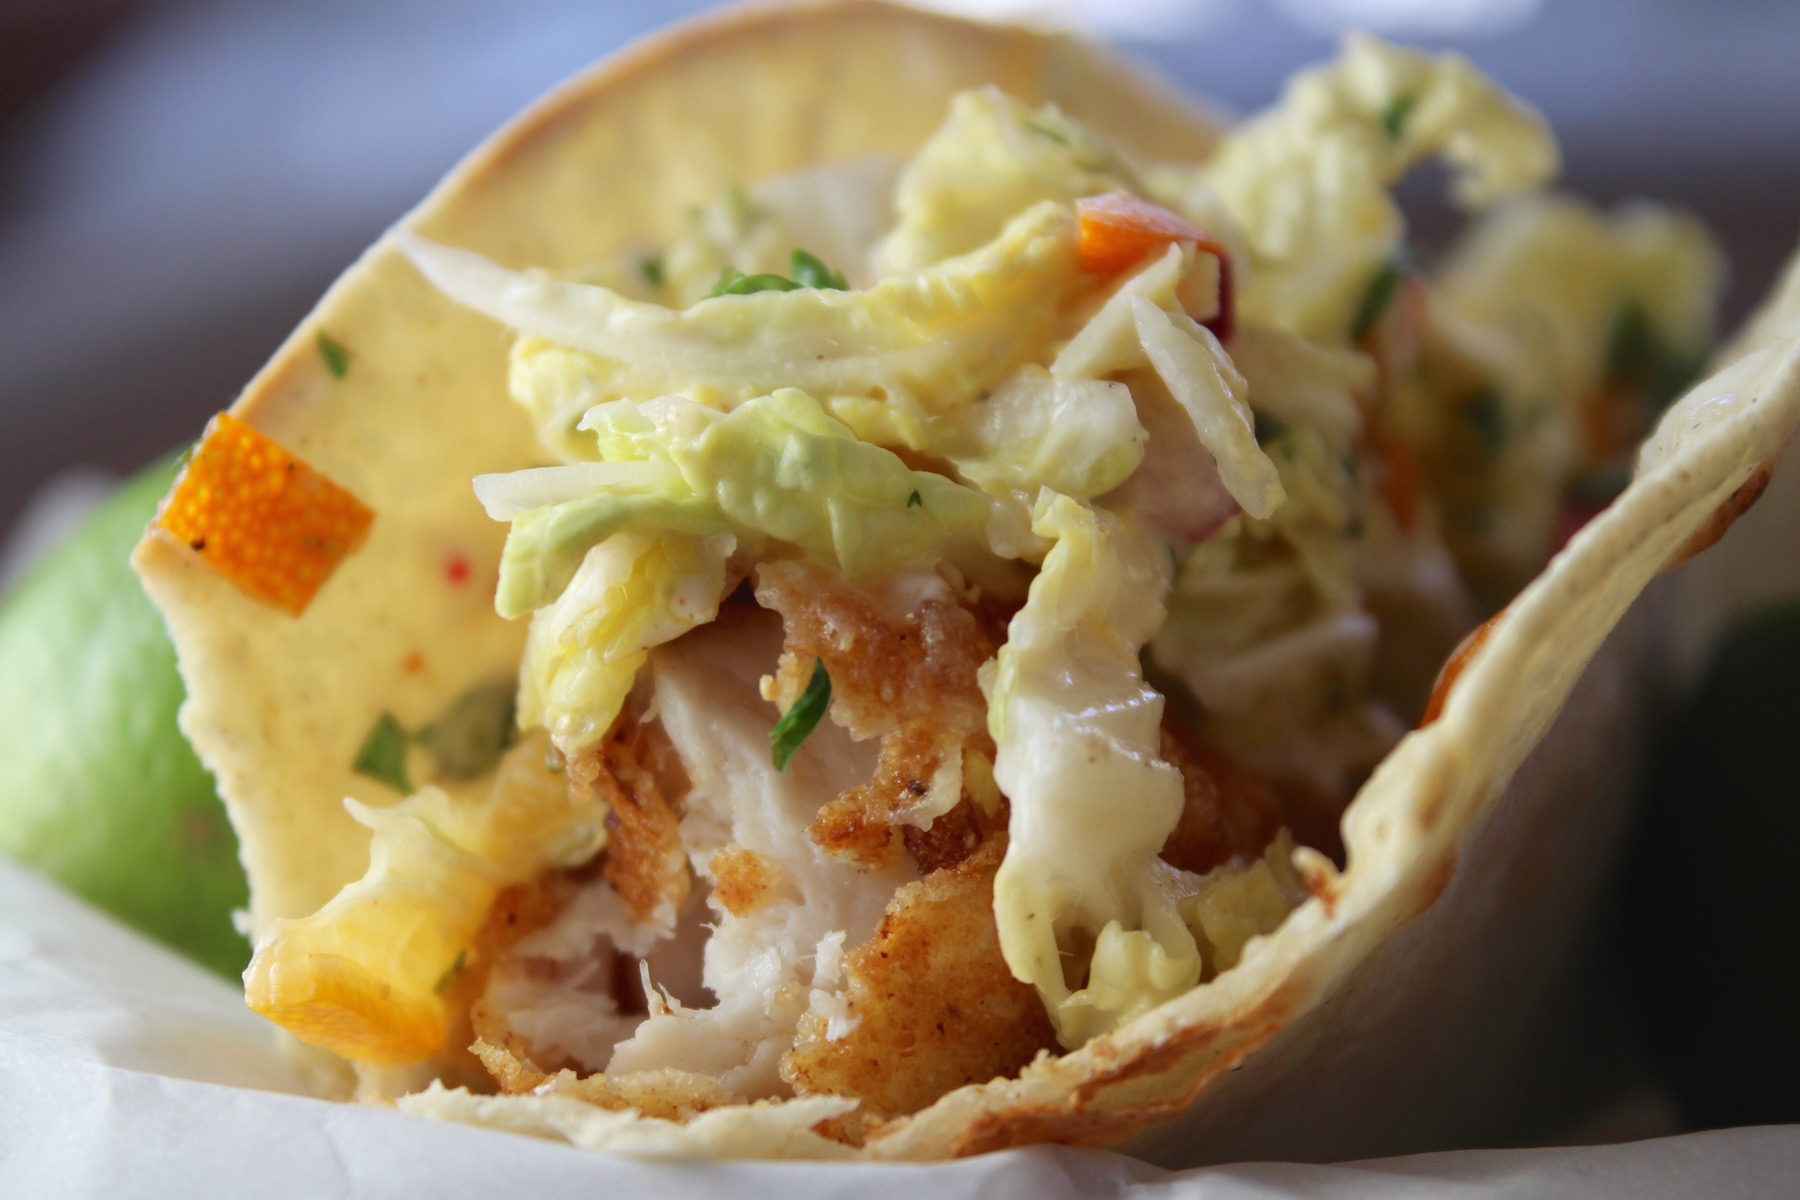 fish taco with kumquat slaw and creamy sauce